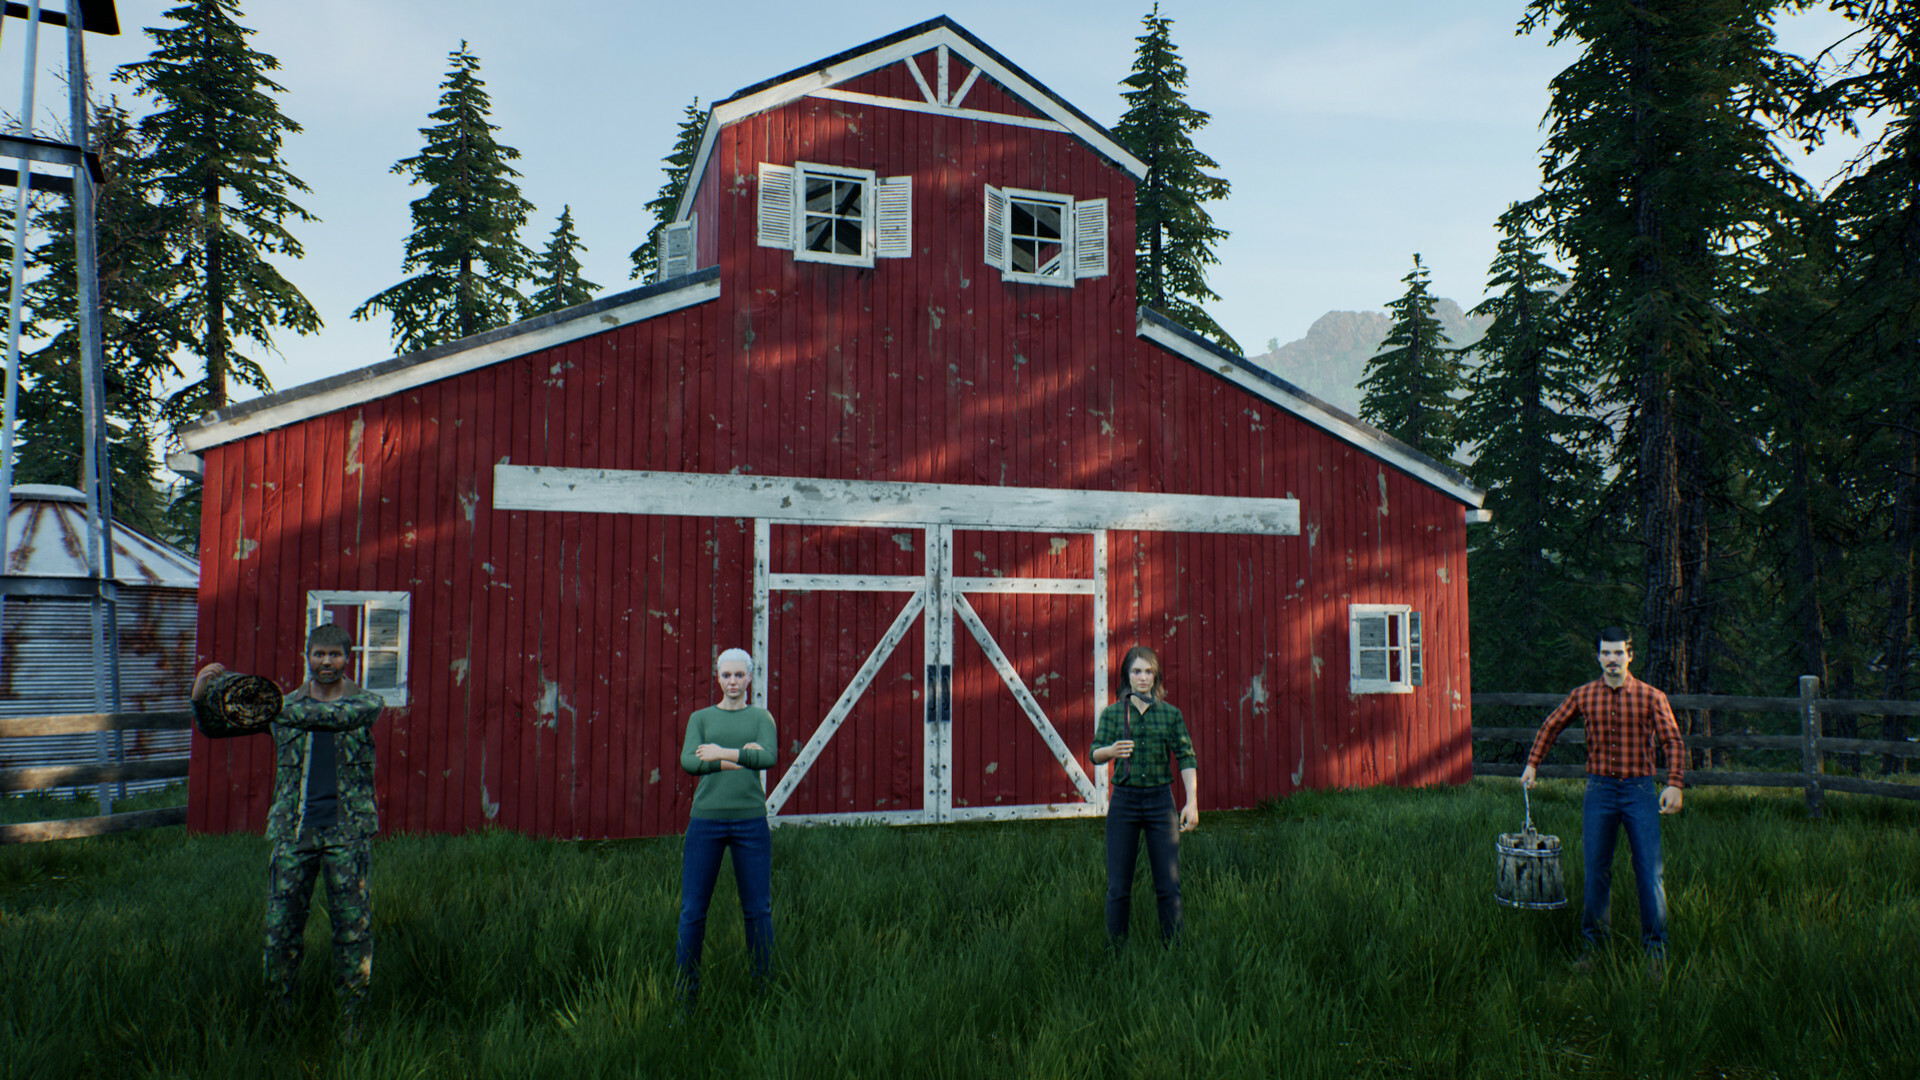 Ranch Simulator - Build, Farm, Hunt - First Few Mins Gameplay